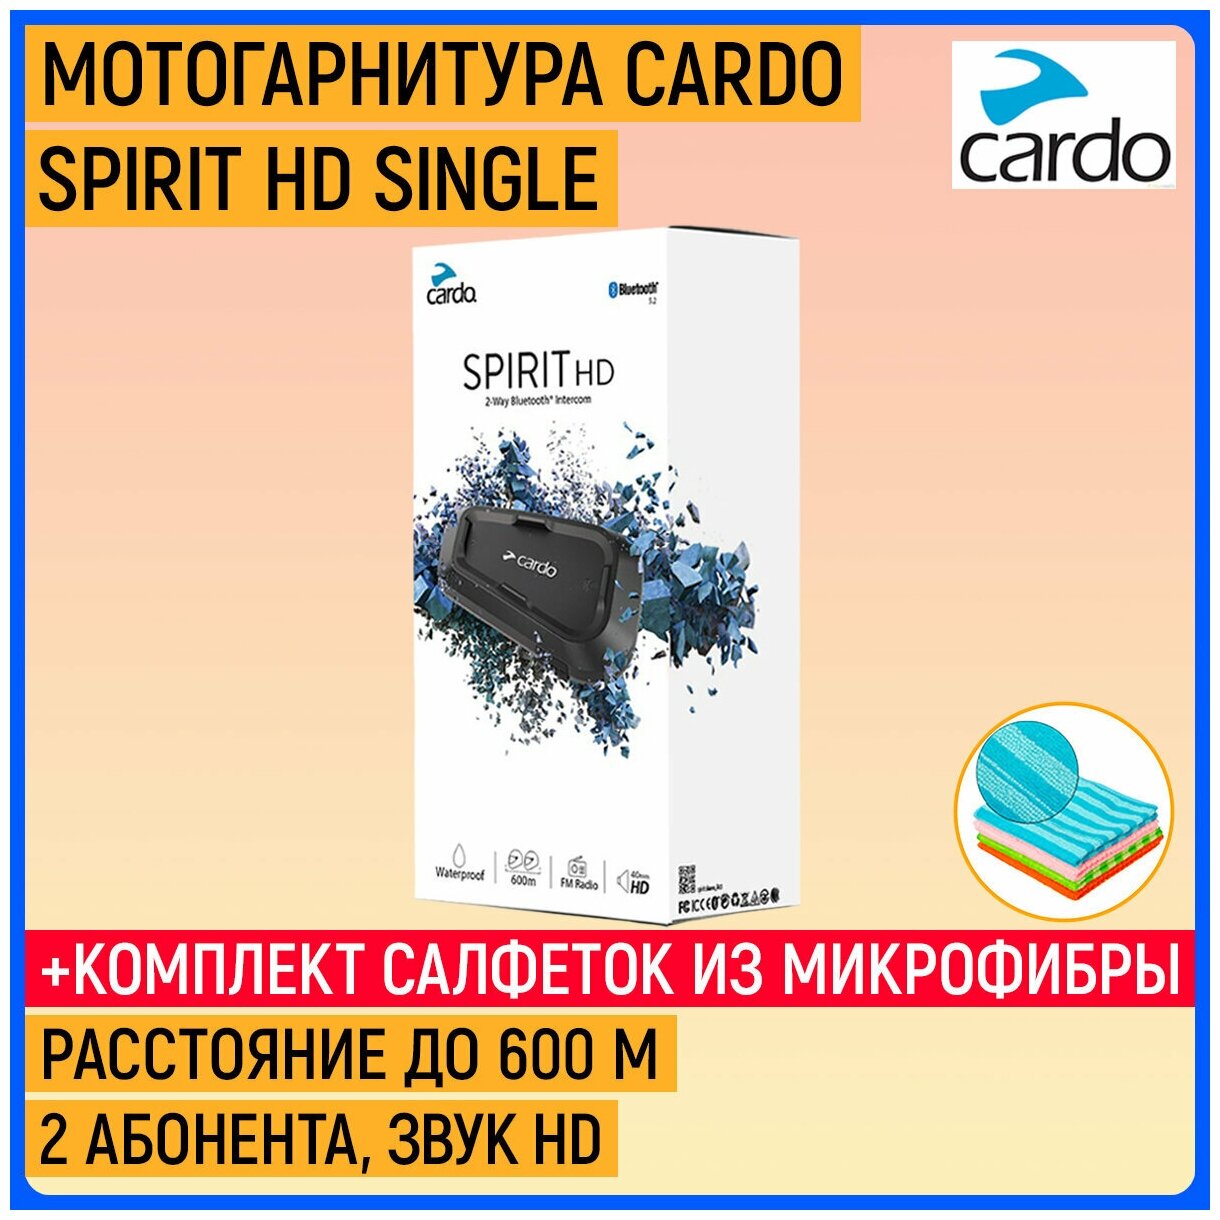 Мотогарнитура Cardo SPIRIT HD SINGLE для шлема / гарнитура для шлема / мото гарнитура / мотогарнитура hd / мотоциклетная